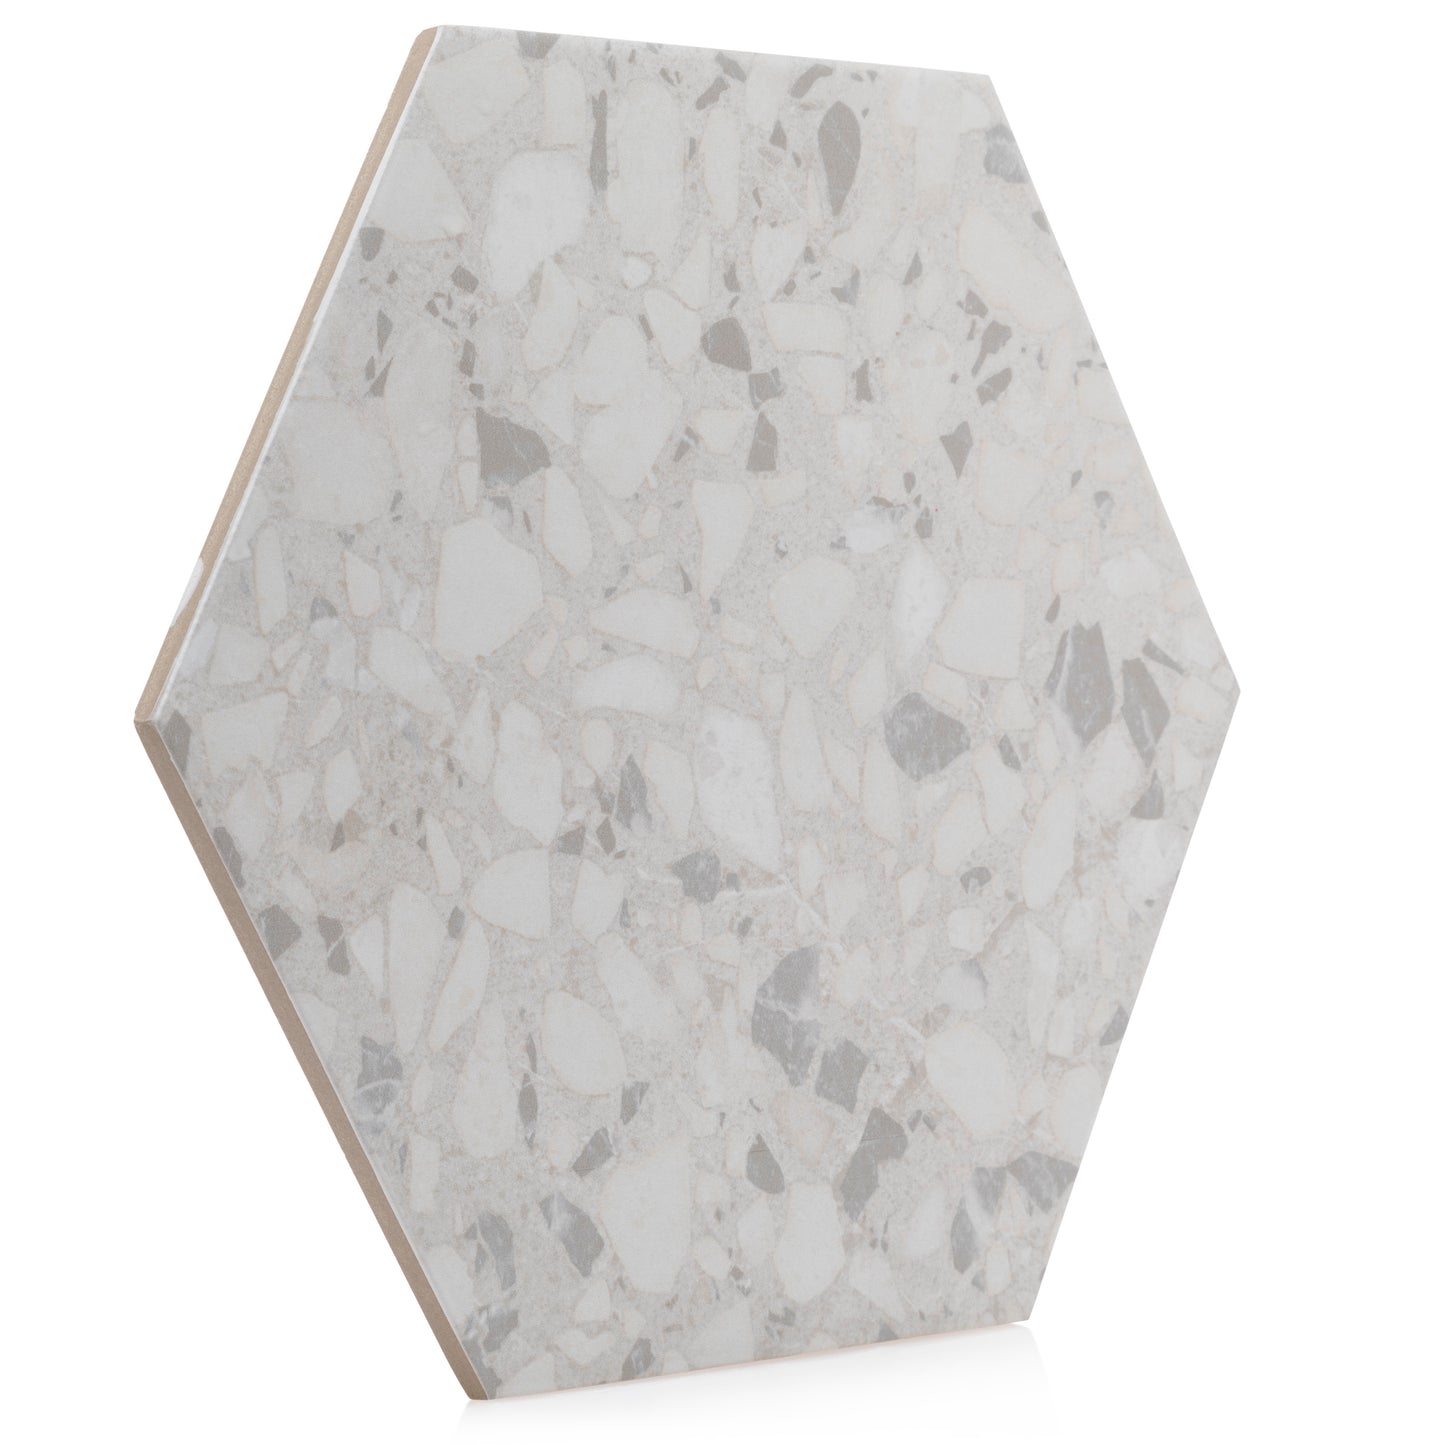 9x10 Hexagon White Terrazzo porcelain tile - Industry Tile